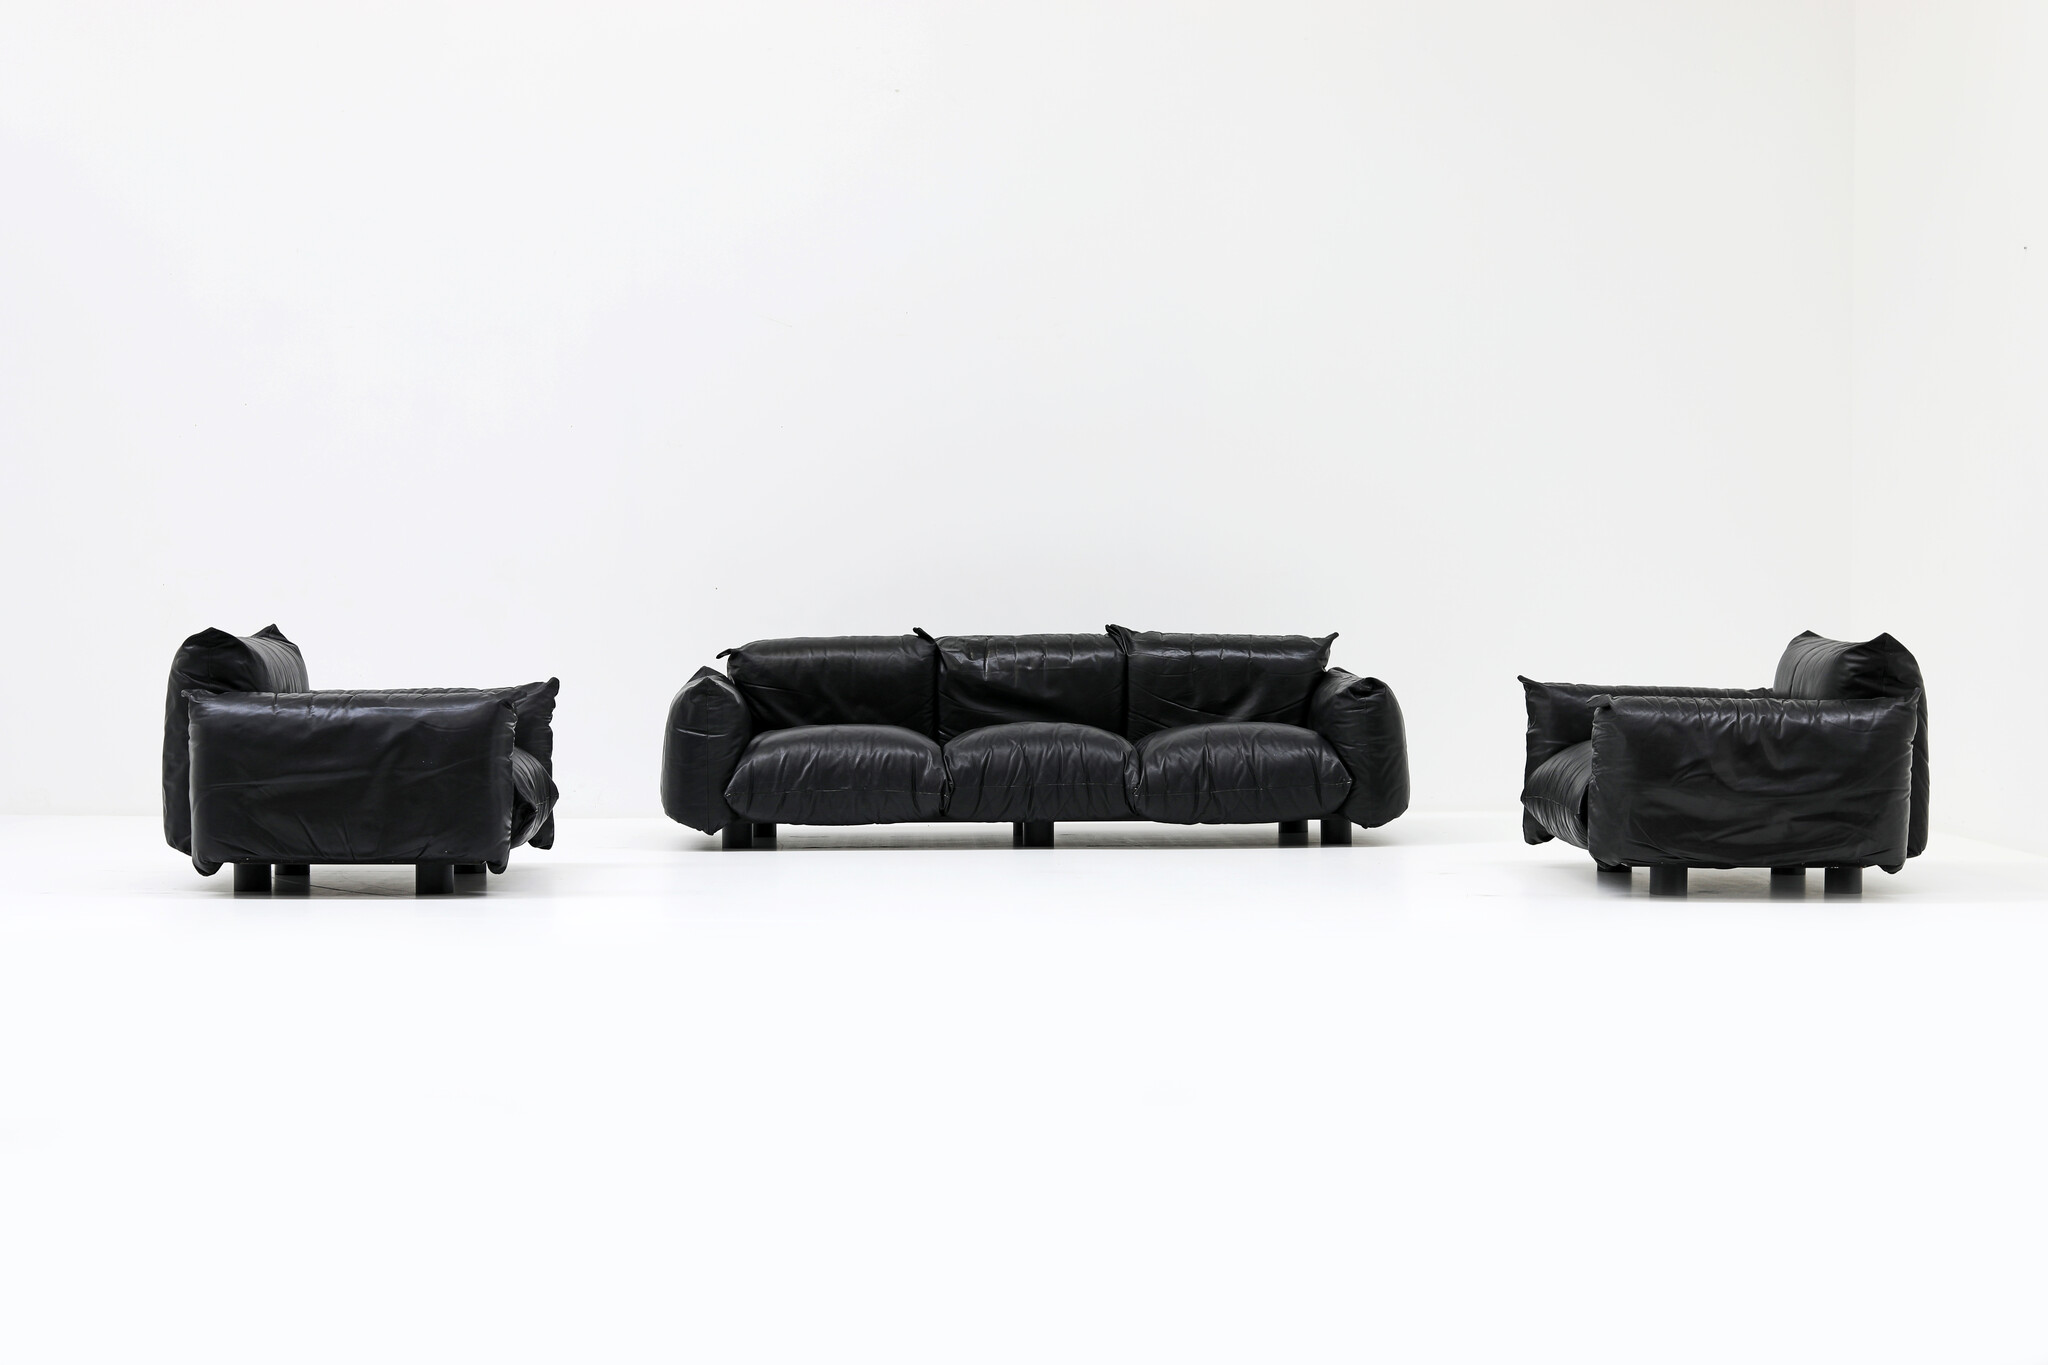 Canapé Marenco conçu par Mario Marenco pour Arflex